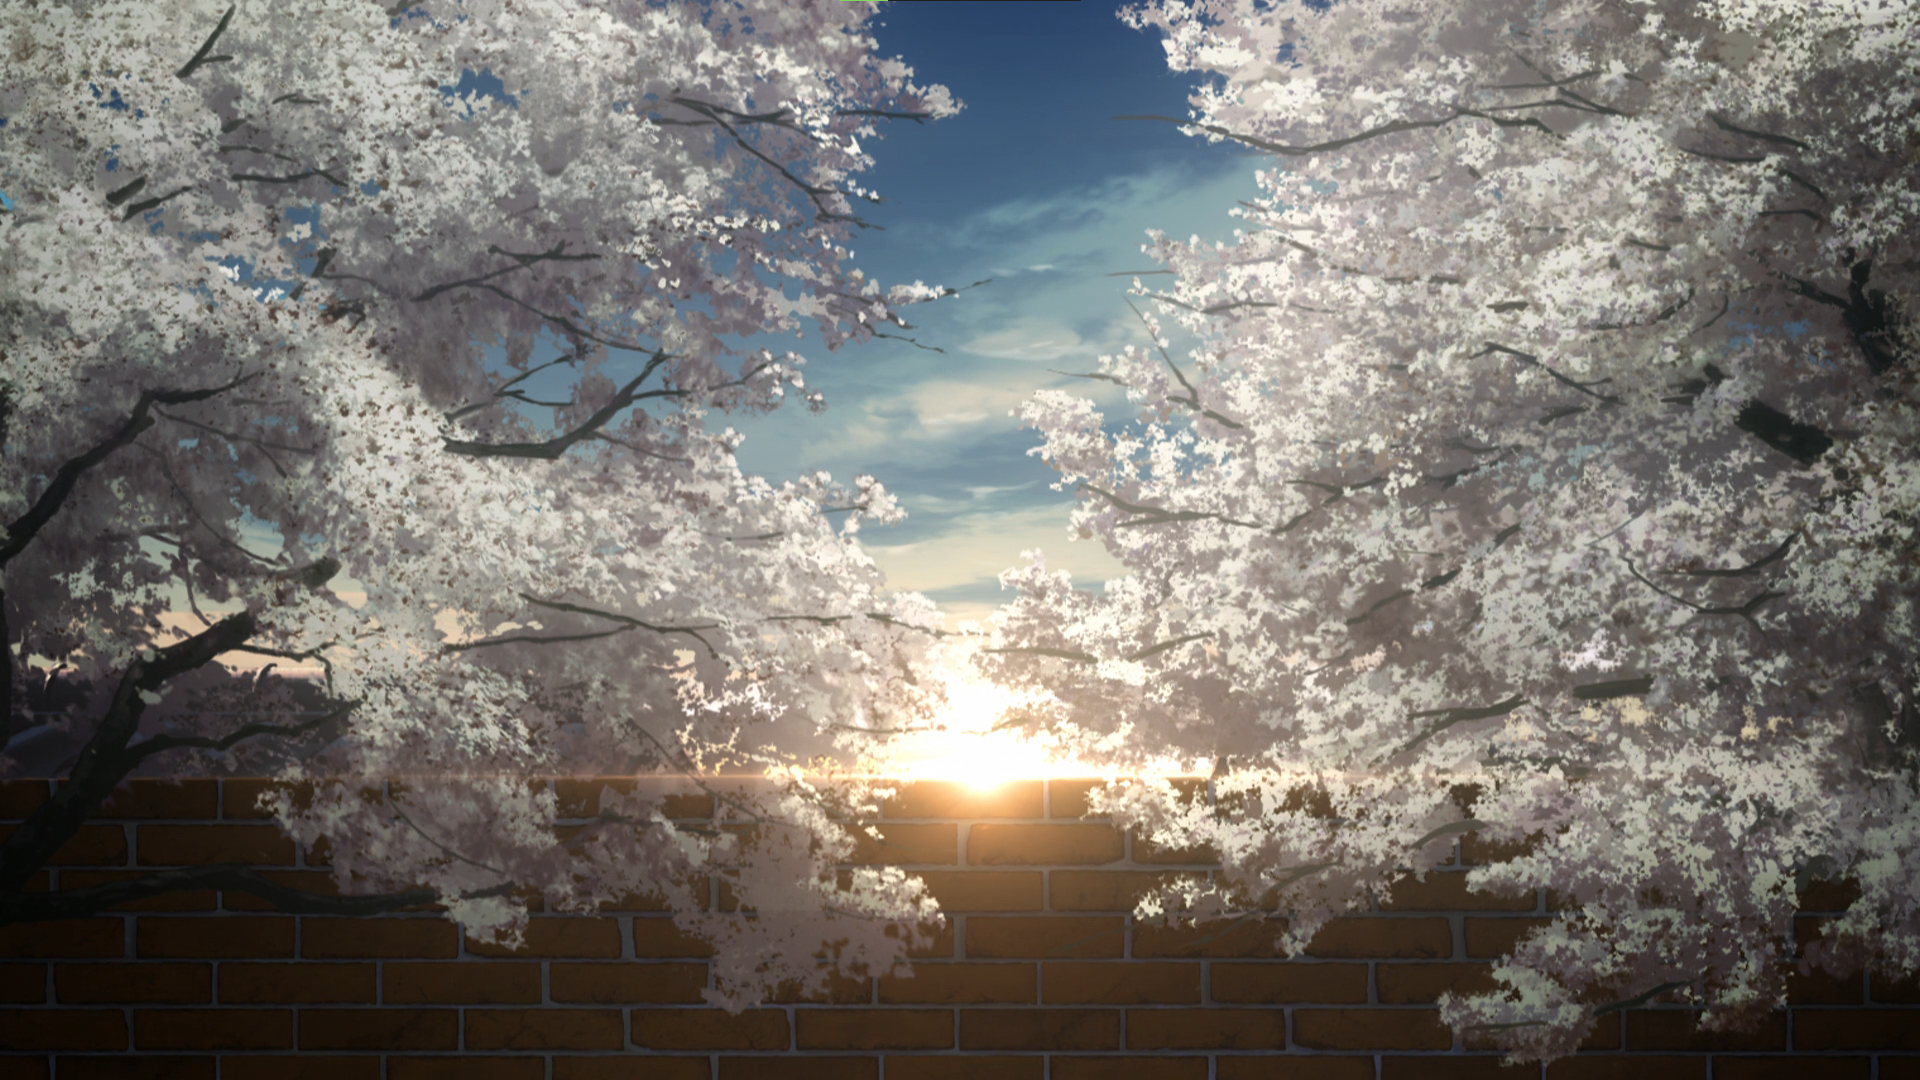 Anime 1920x1080 Kimetsu no Yaiba trees sunrise anime Anime screenshot sky clouds sunlight wall bricks